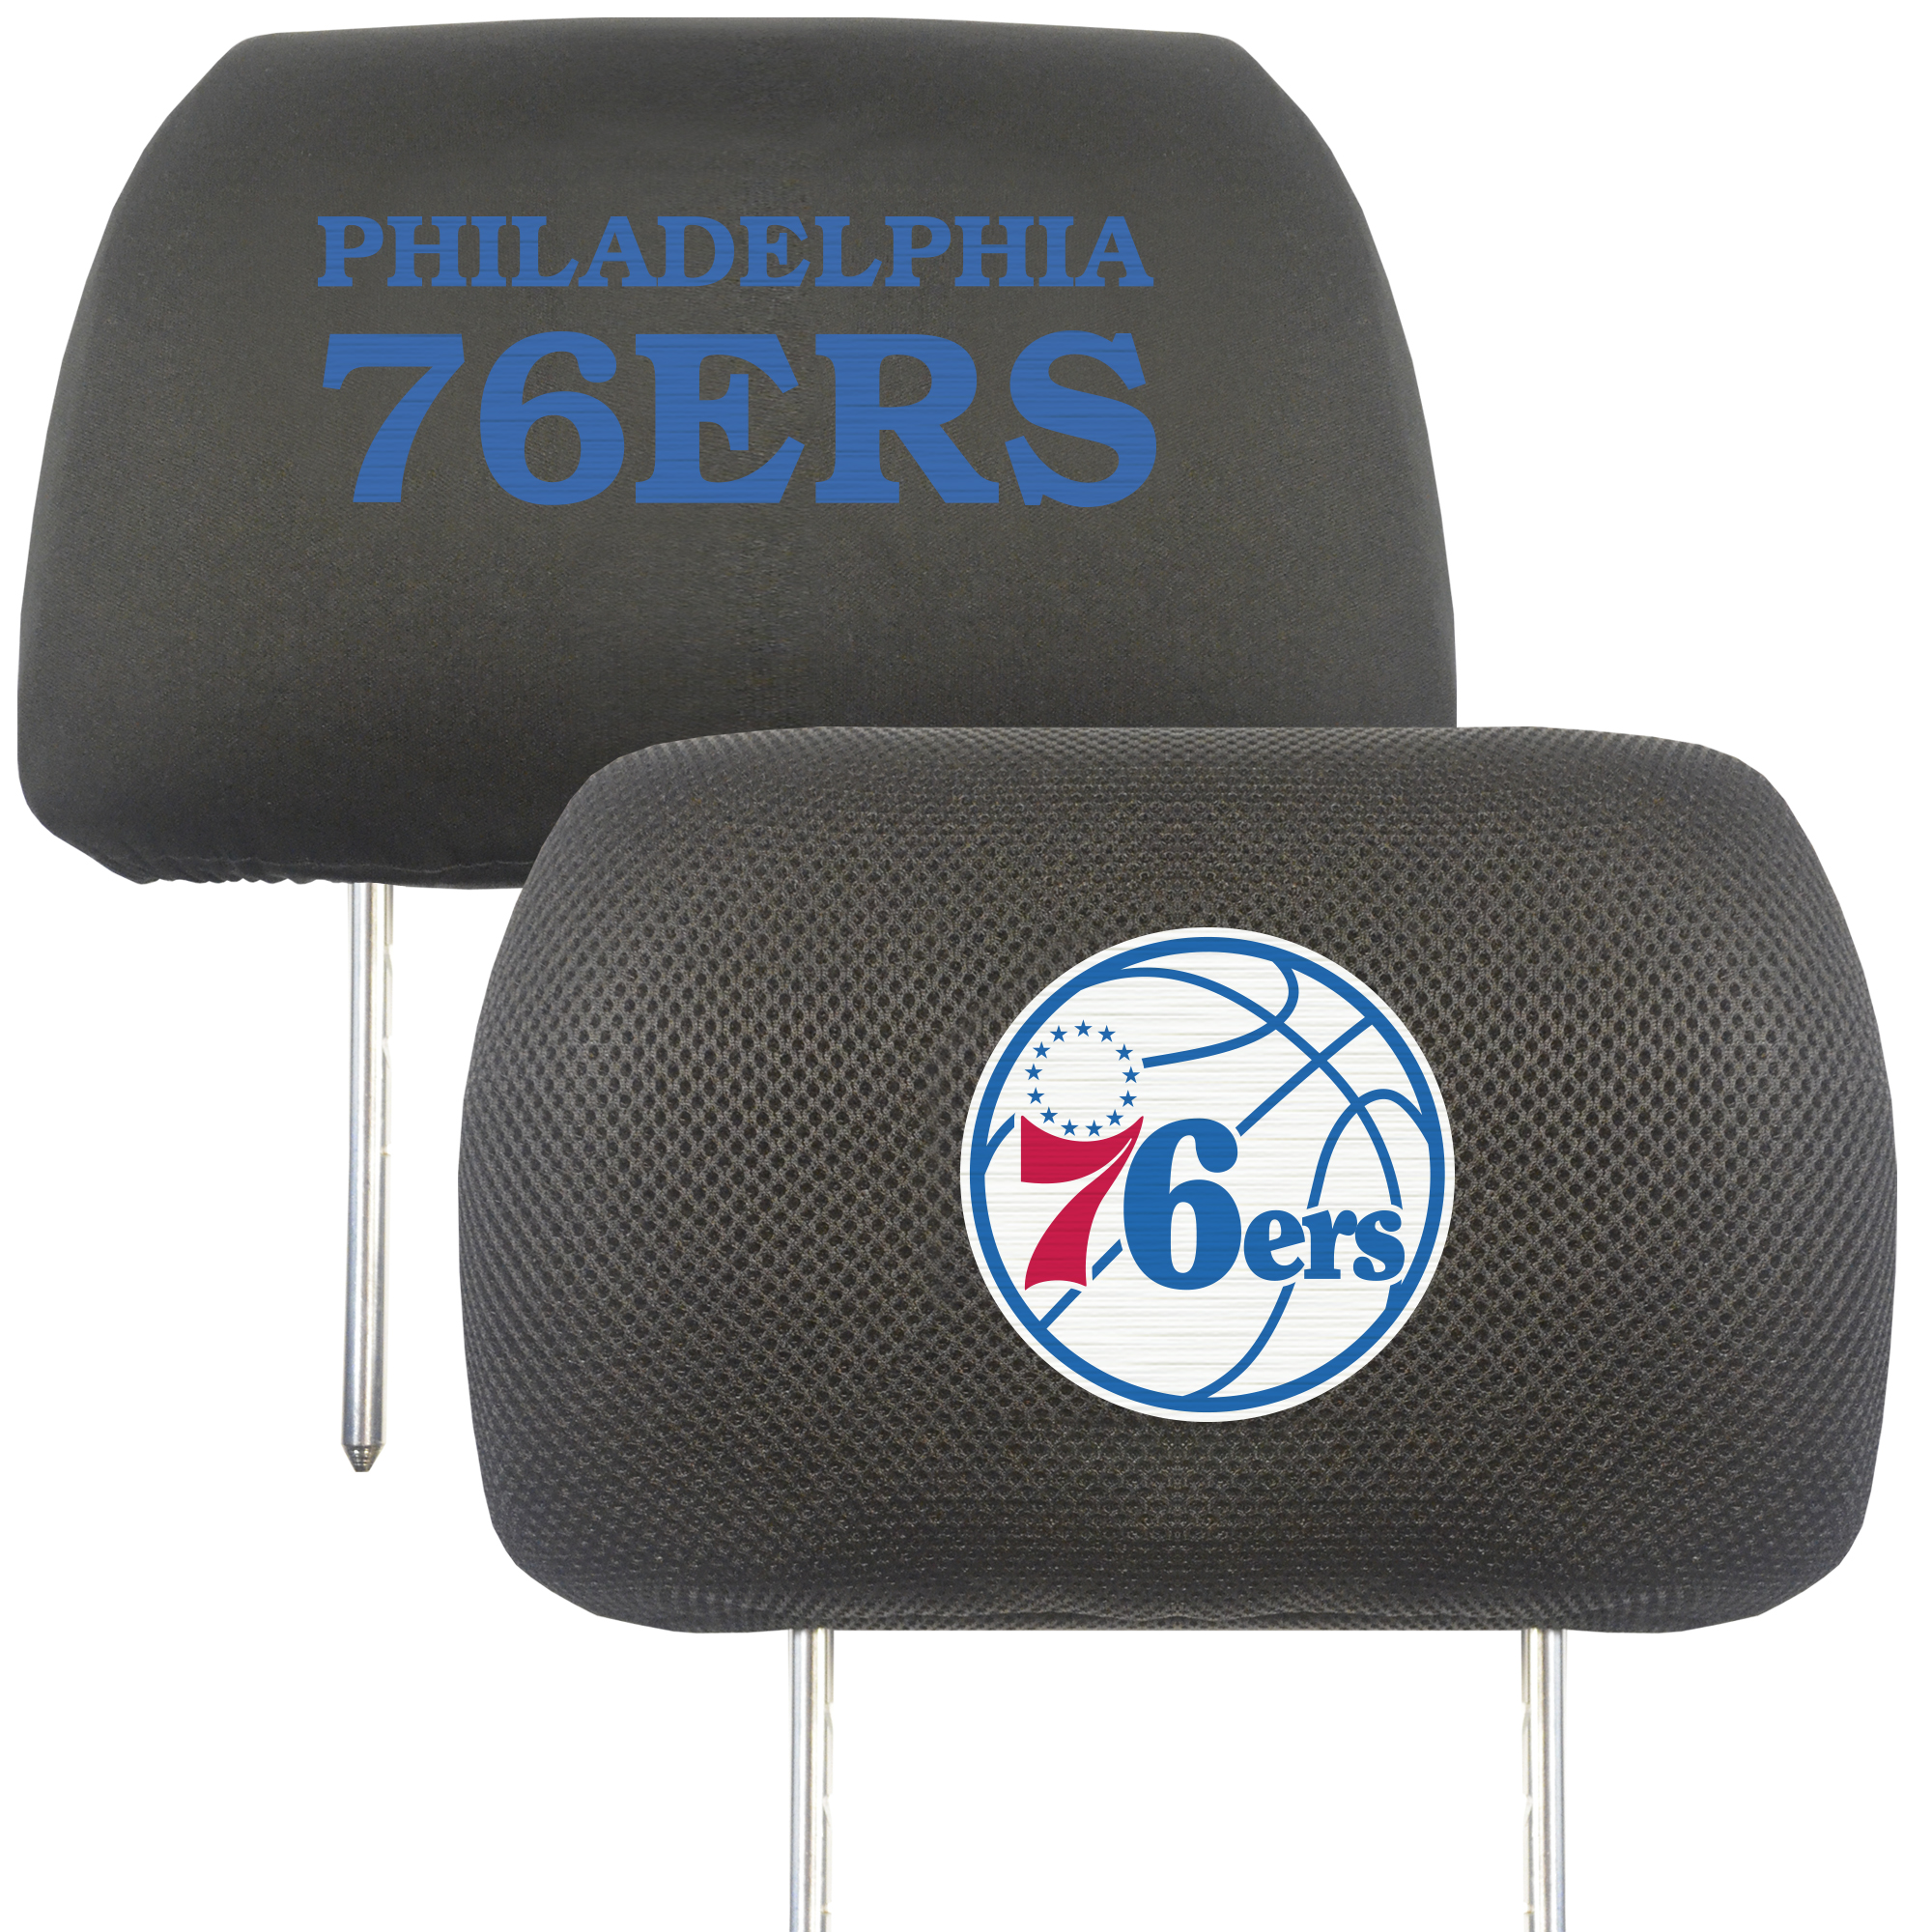 Philadelphia 76ers Headrest Covers FanMats Special Order